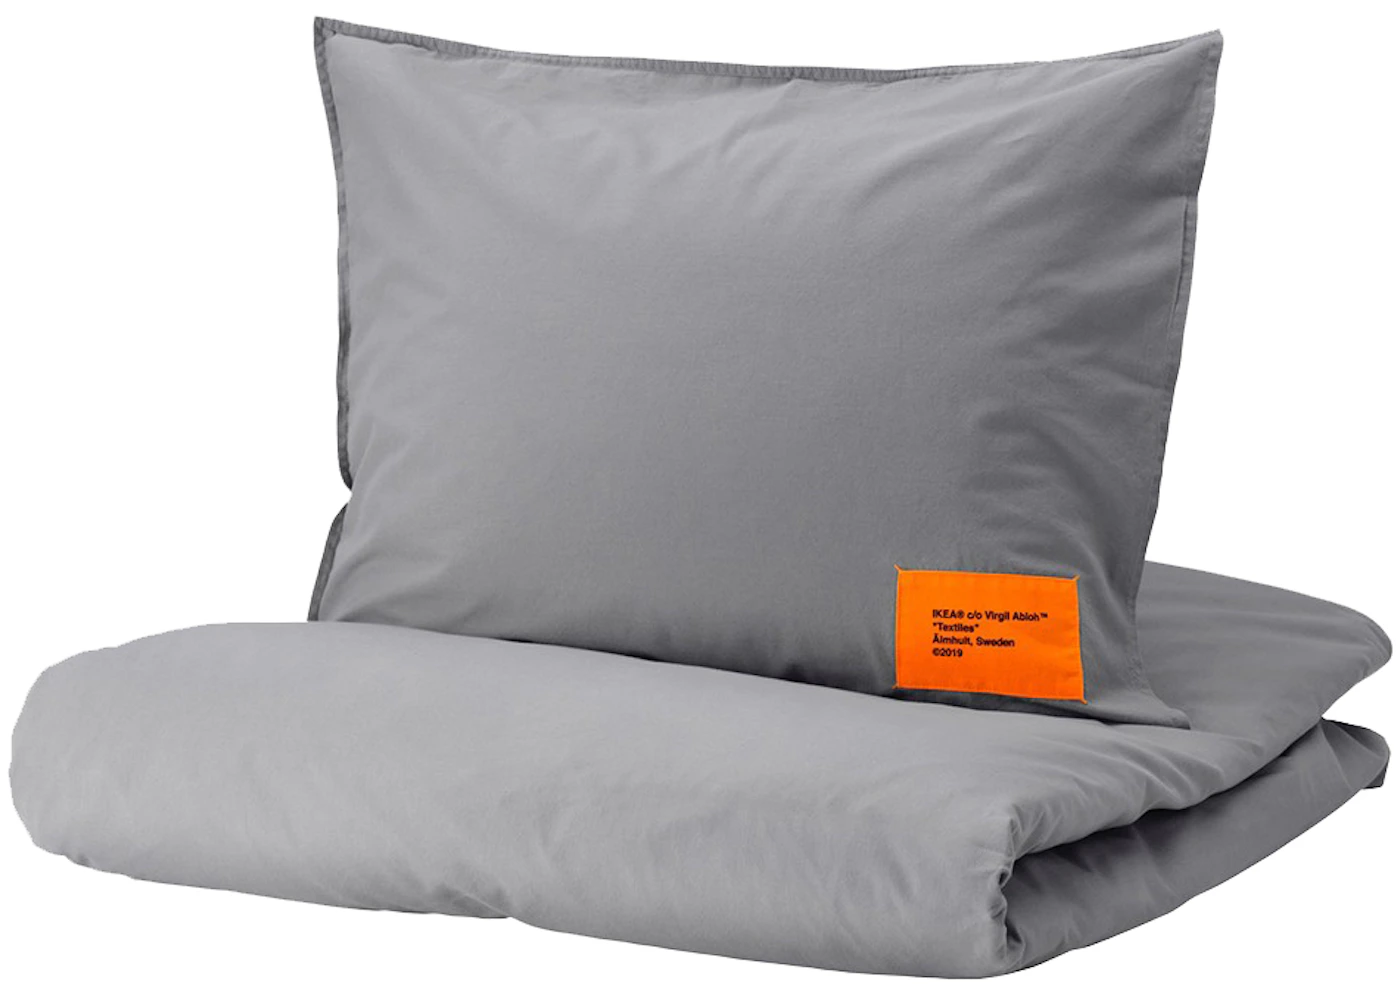 Ikea bed sheet